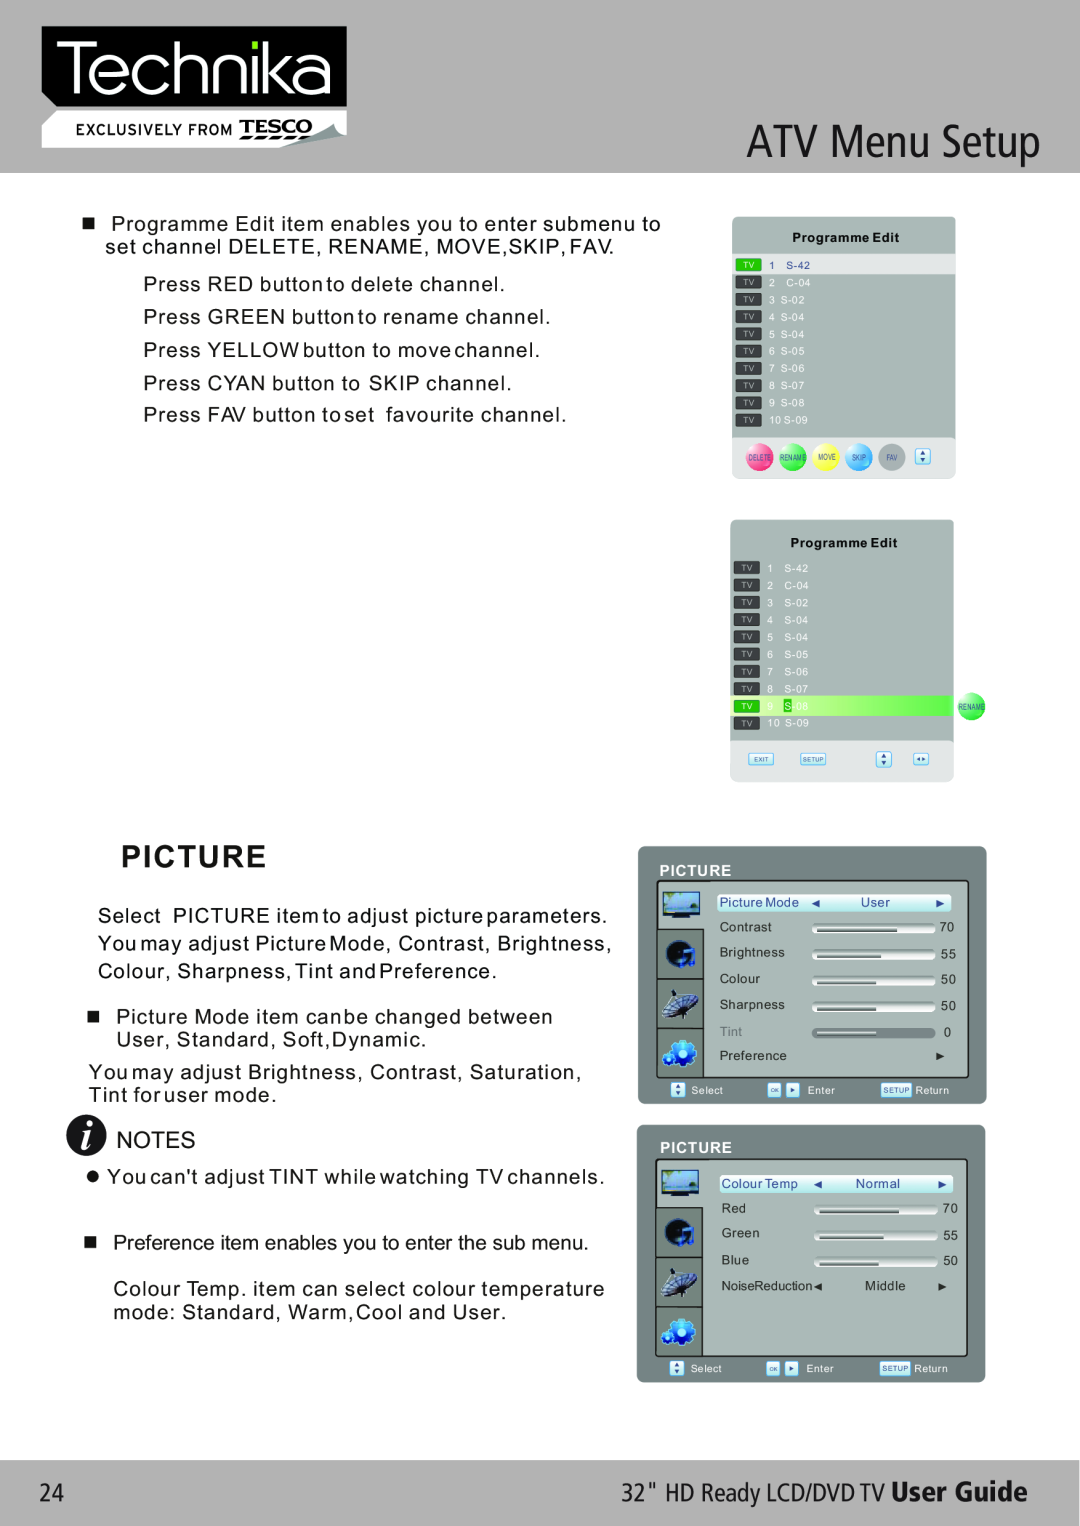 Technika 32-612 manual ATV Menu Setup, Picture, HD Ready LCD/DVD TV User Guide, Programme Edit 